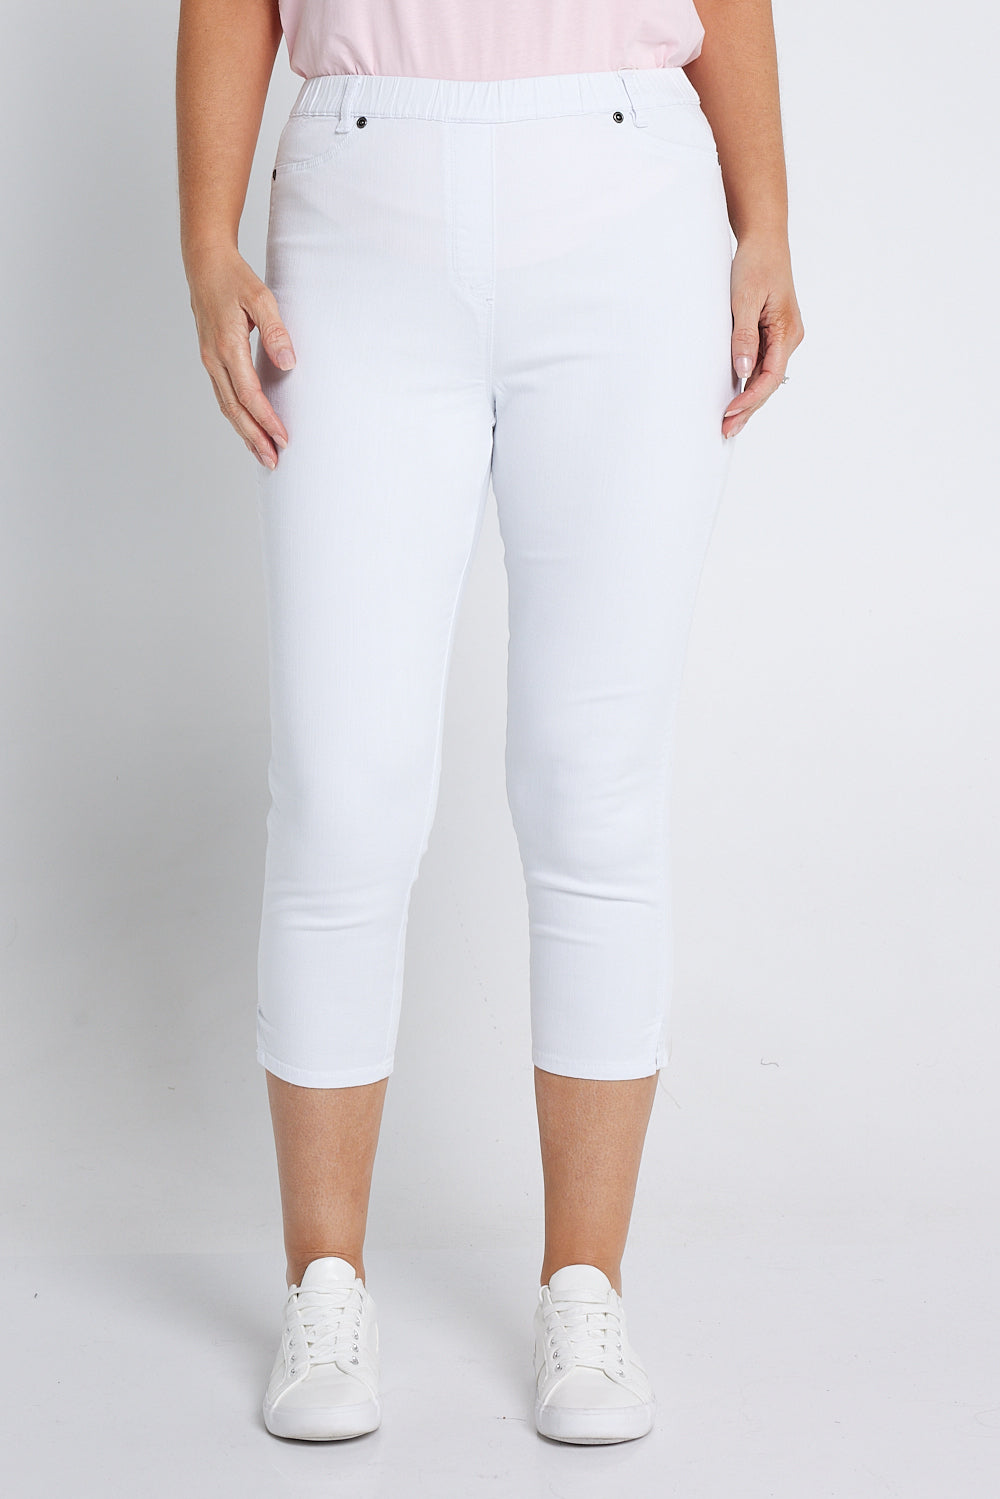 Stefani Capri Pants - White  Cafe Latte Stretch Cotton Capri Jegging –  TULIO Fashion